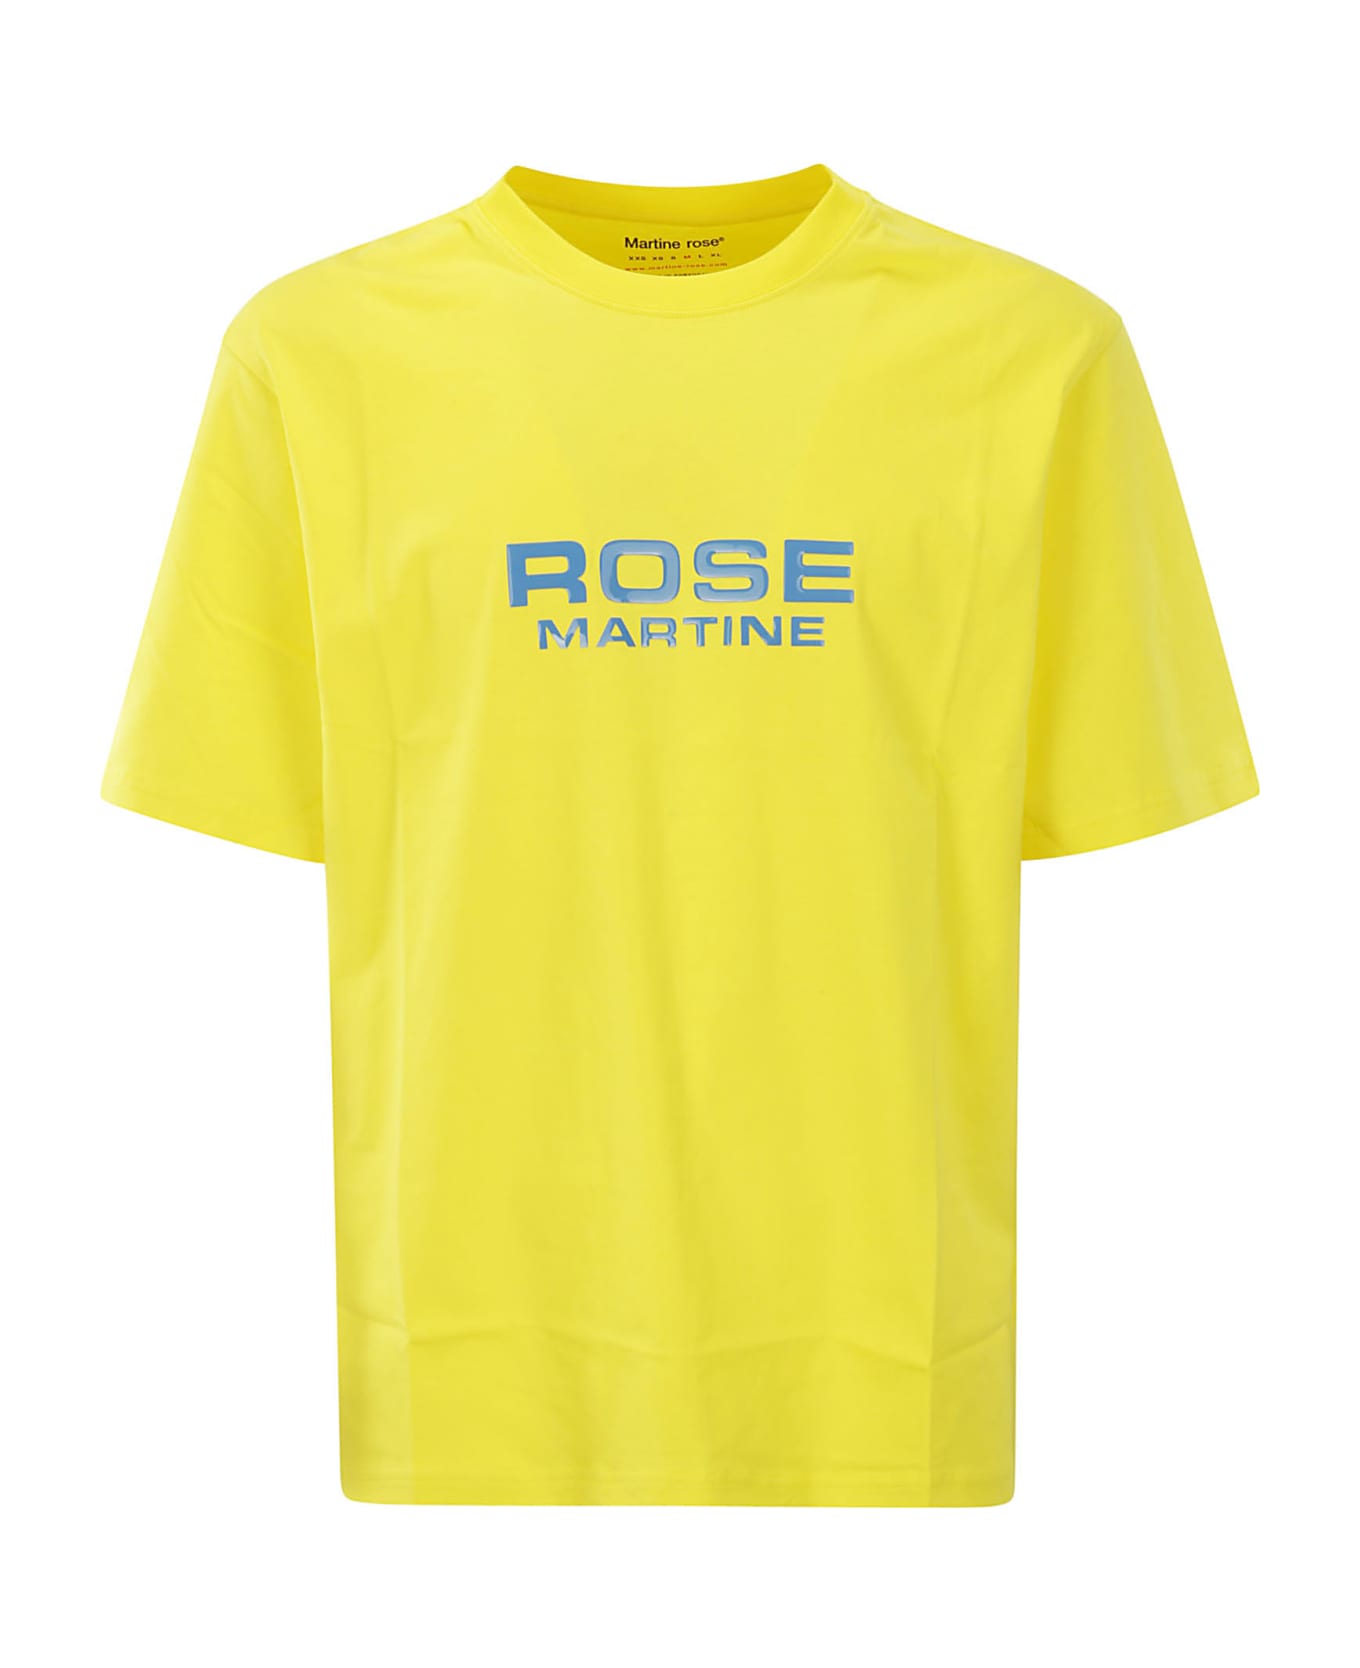 Martine Rose Classic T-shirt - ACID YELLOW / ROSE Tシャツ